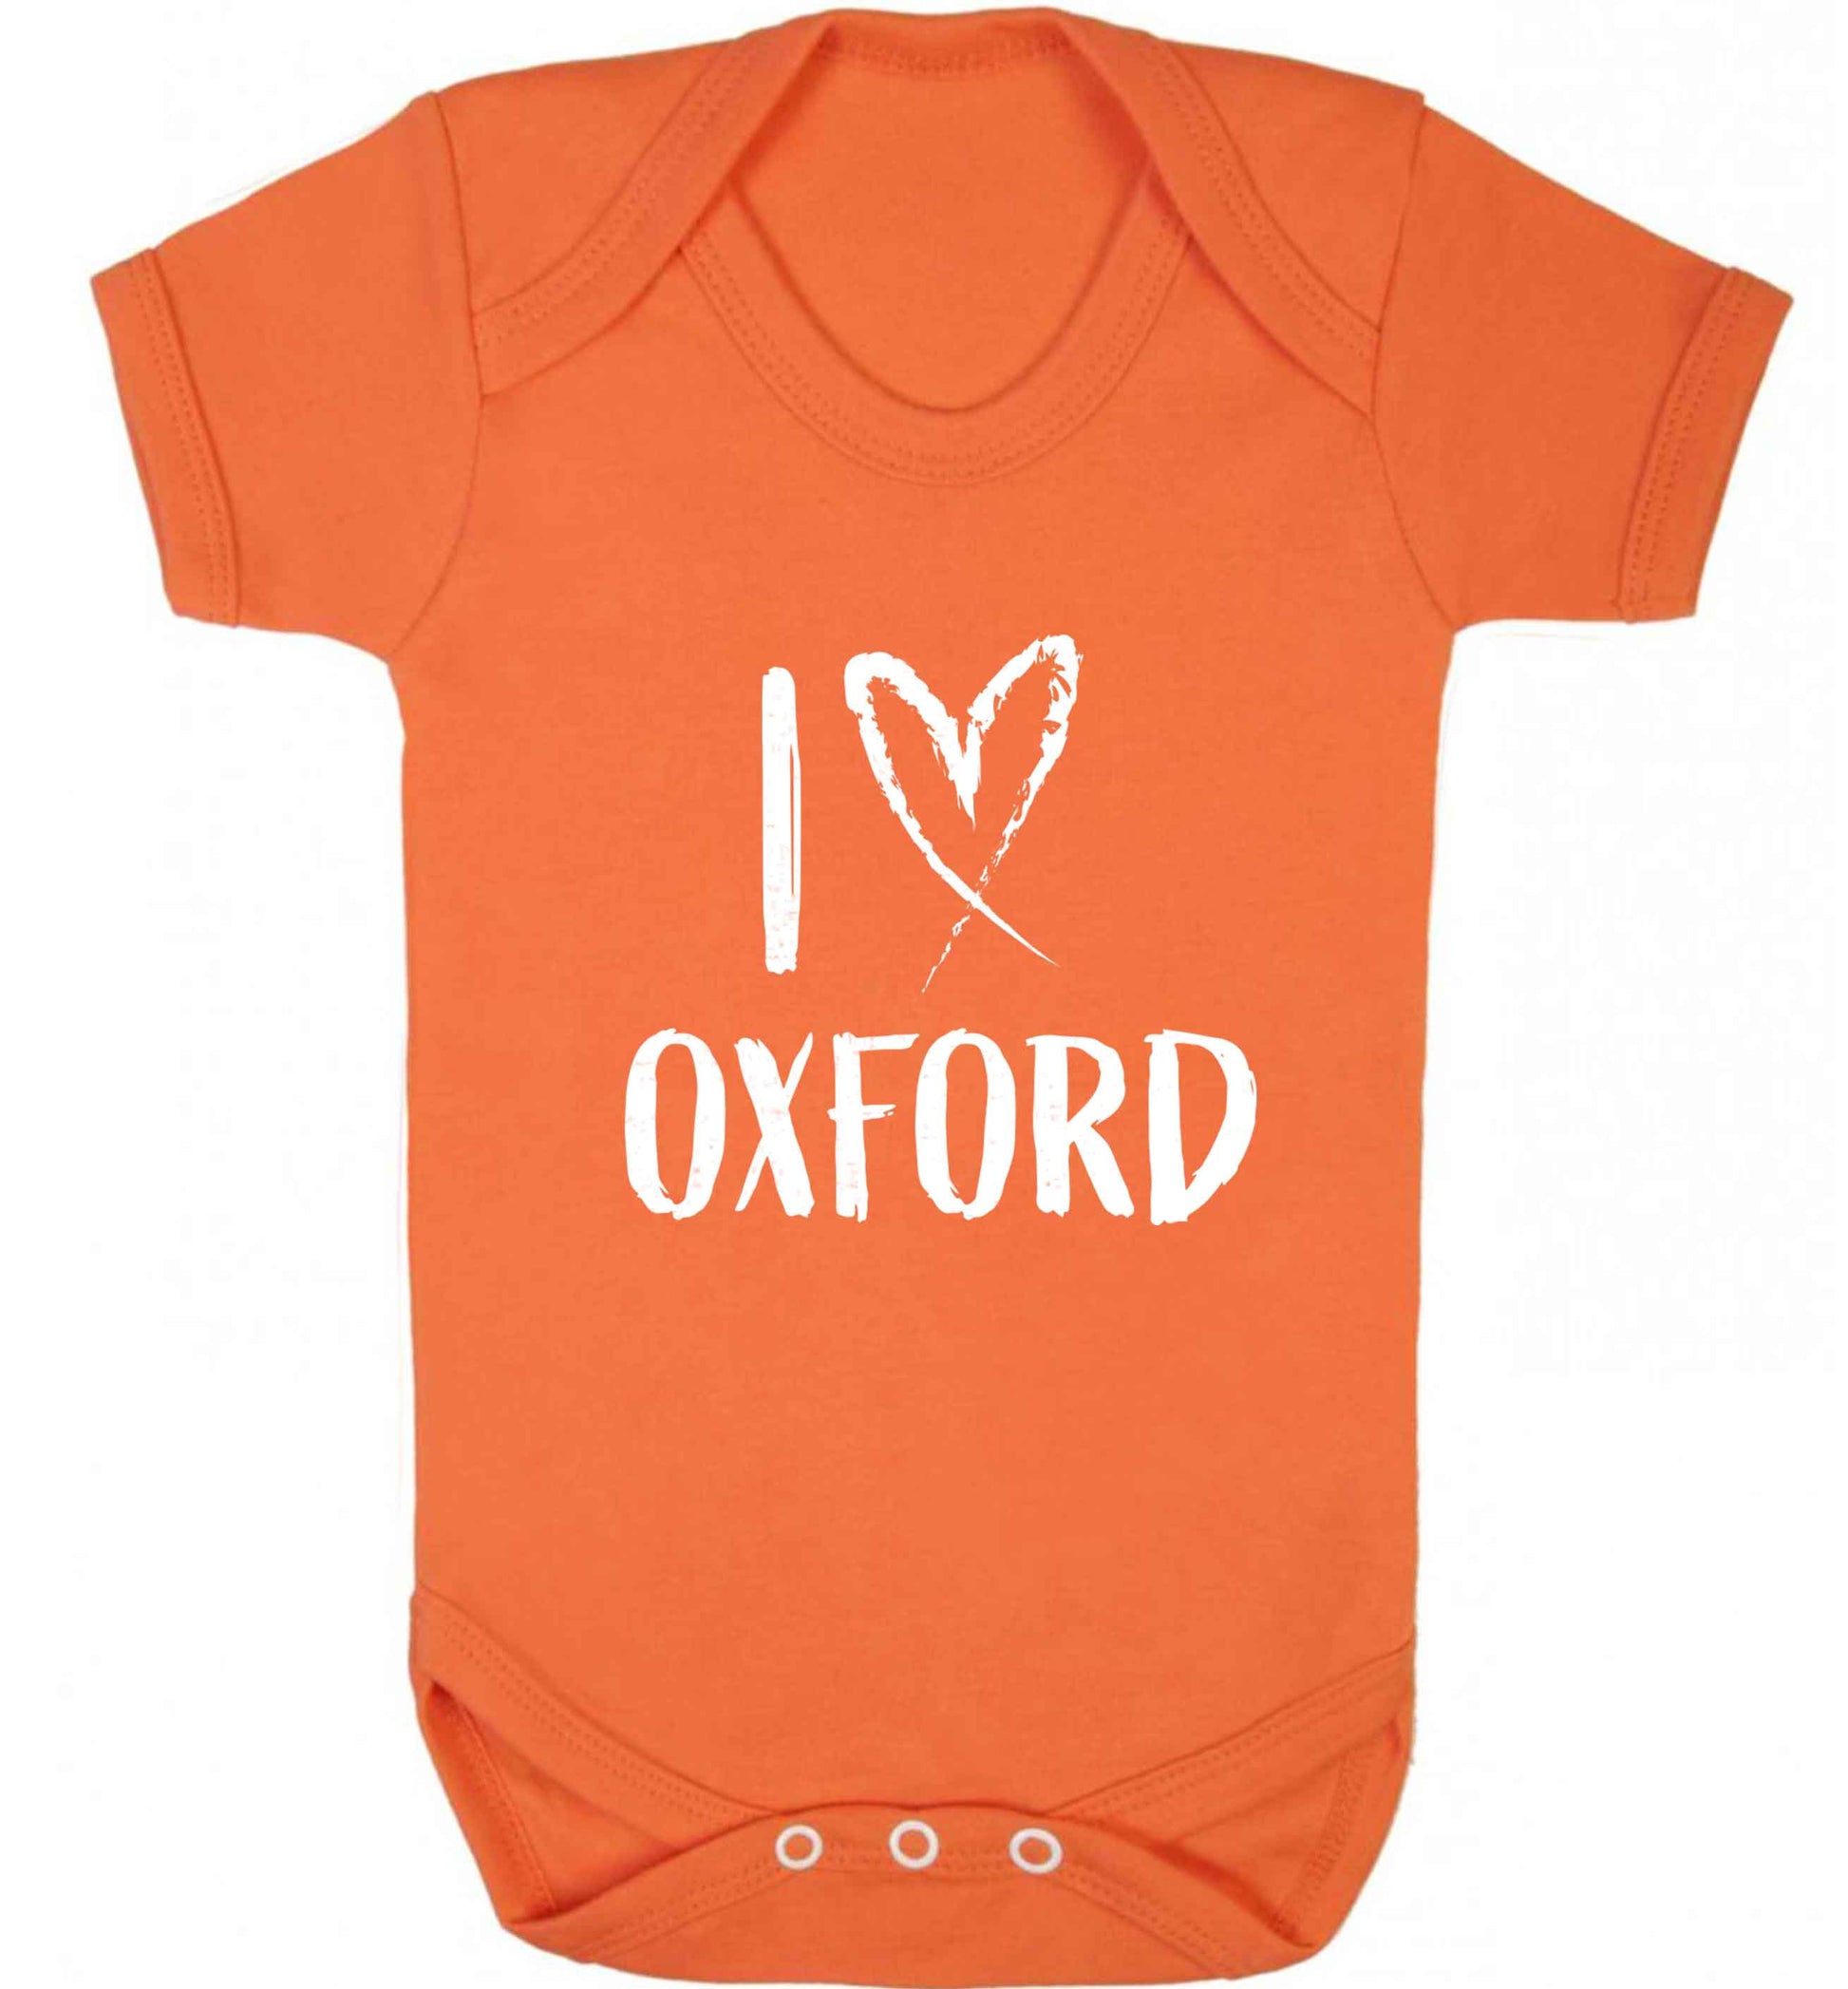 I love Oxford baby vest orange 18-24 months